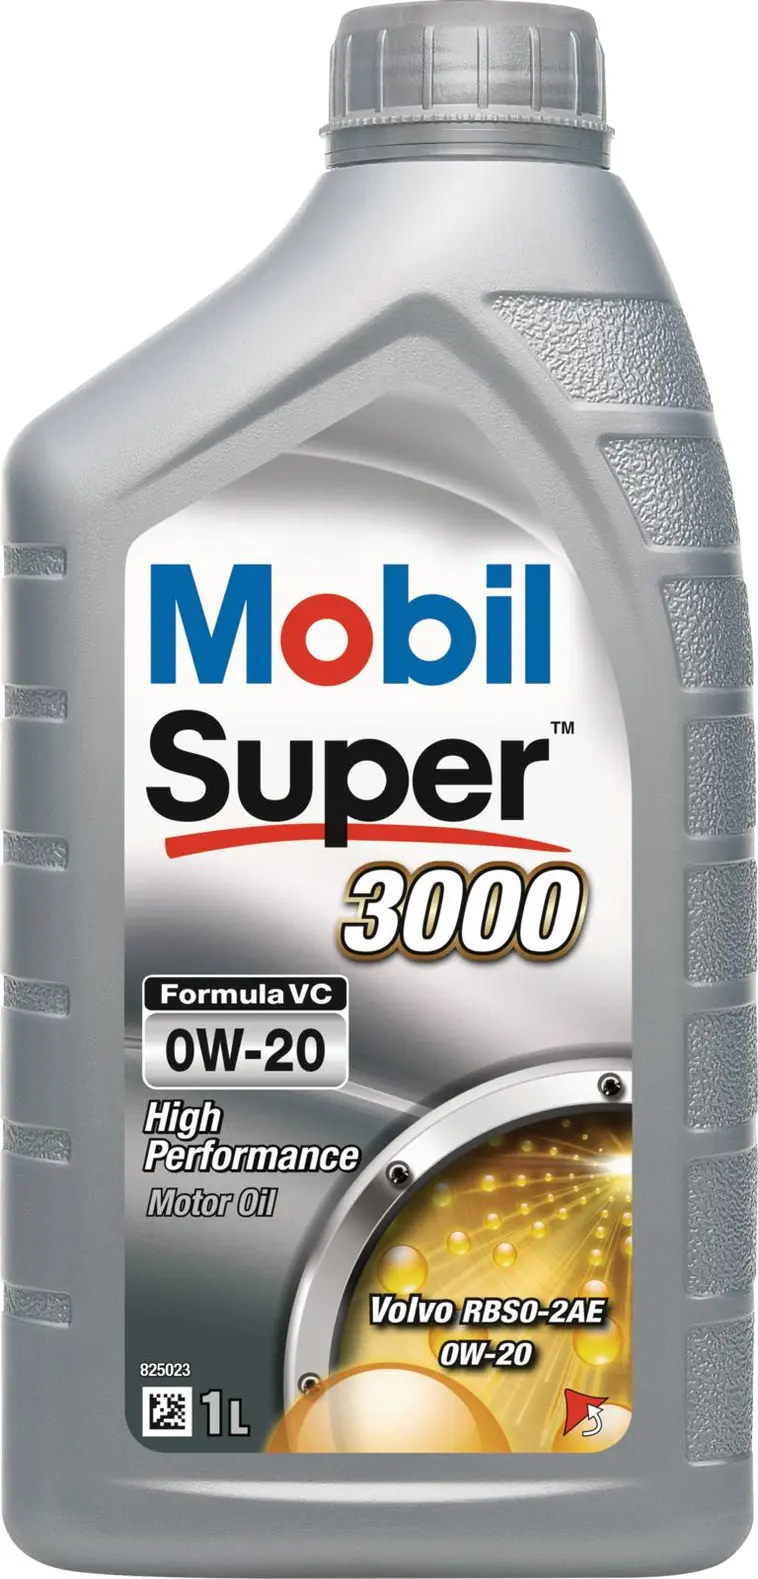 Mobil Super 3000 1l moottoriöljy Formula VC 0W-20